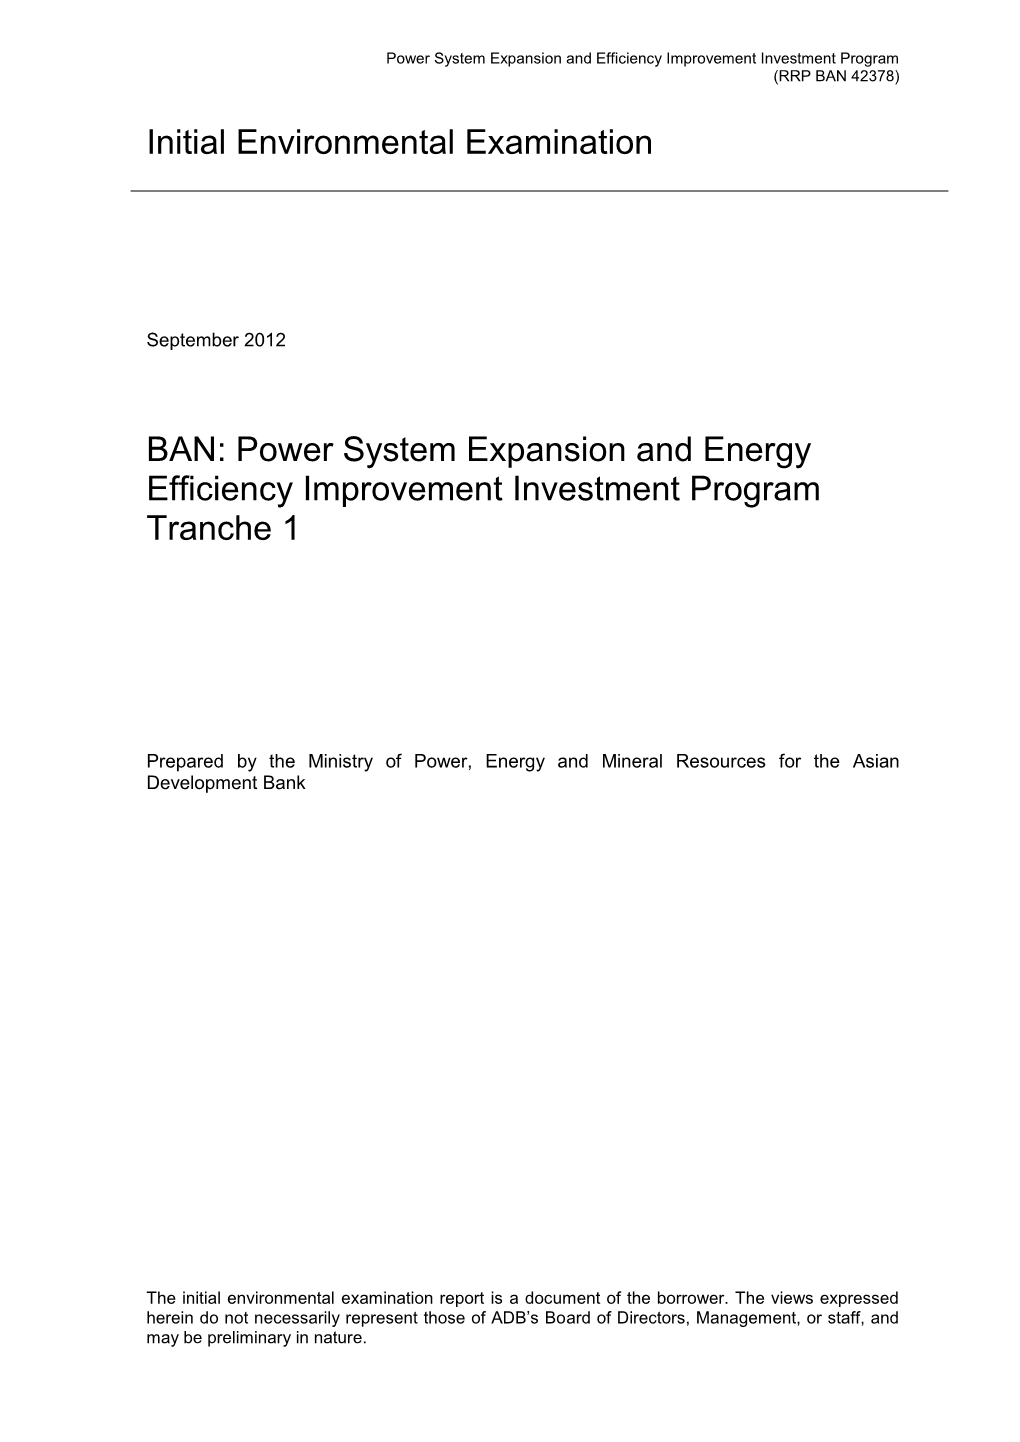 Initial Environmental Examination BAN: Power System Expansion And